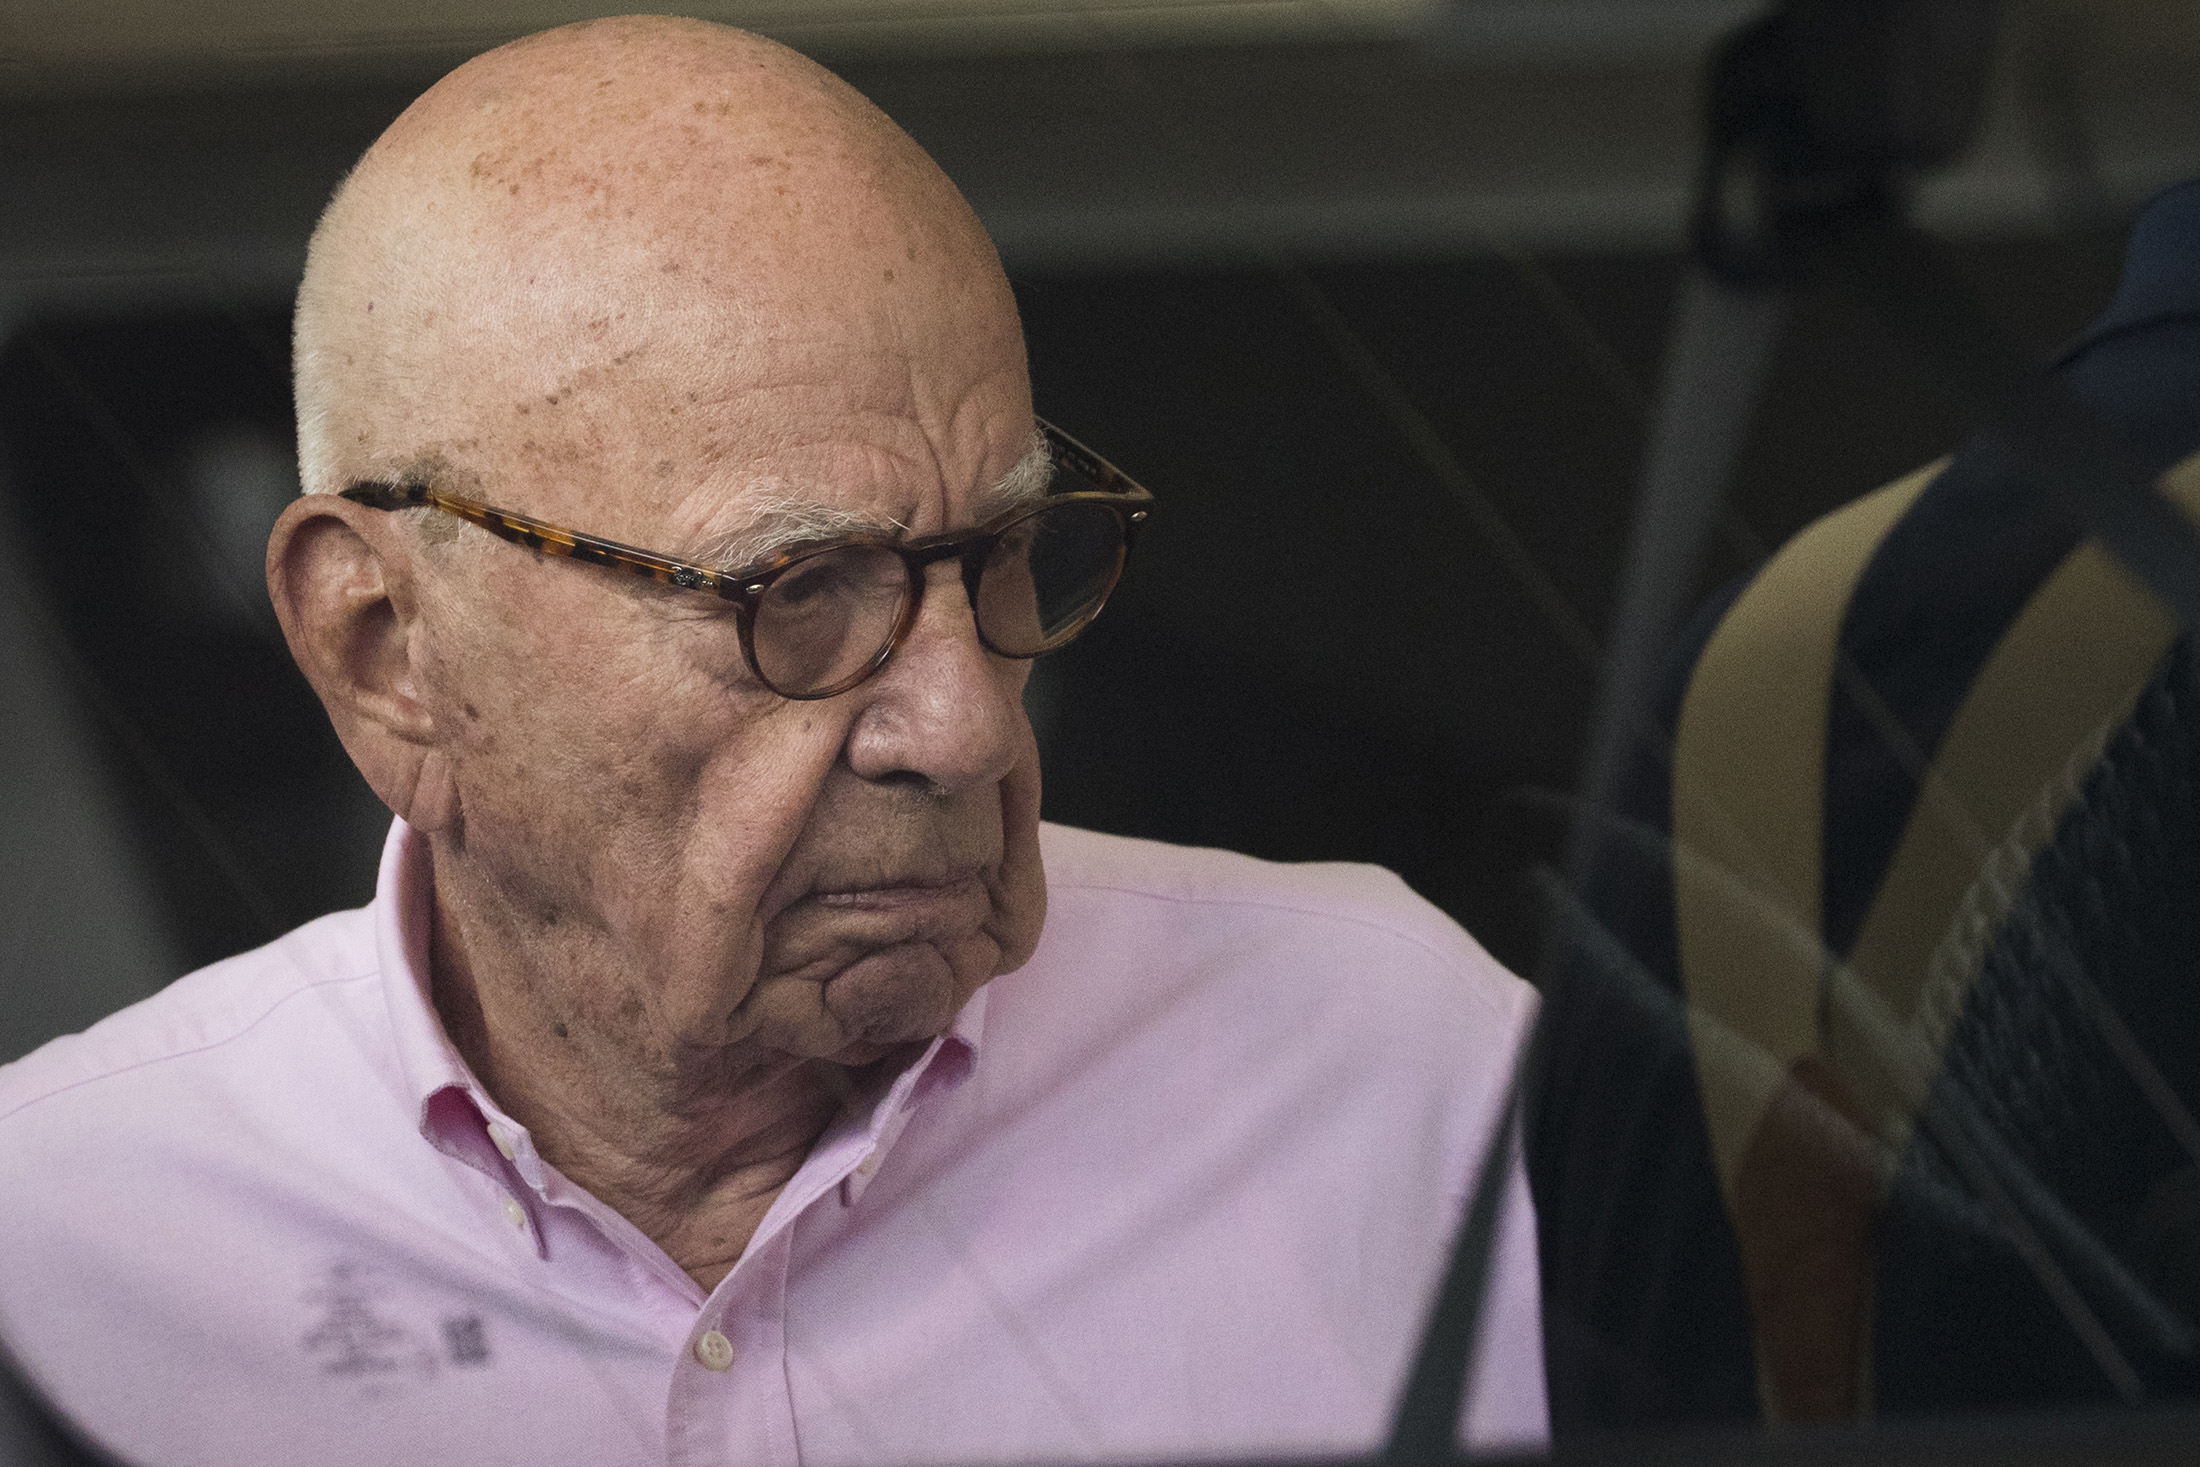 Who Is Rupert Murdoch? CNN and New York Times Documentary Series on Fox